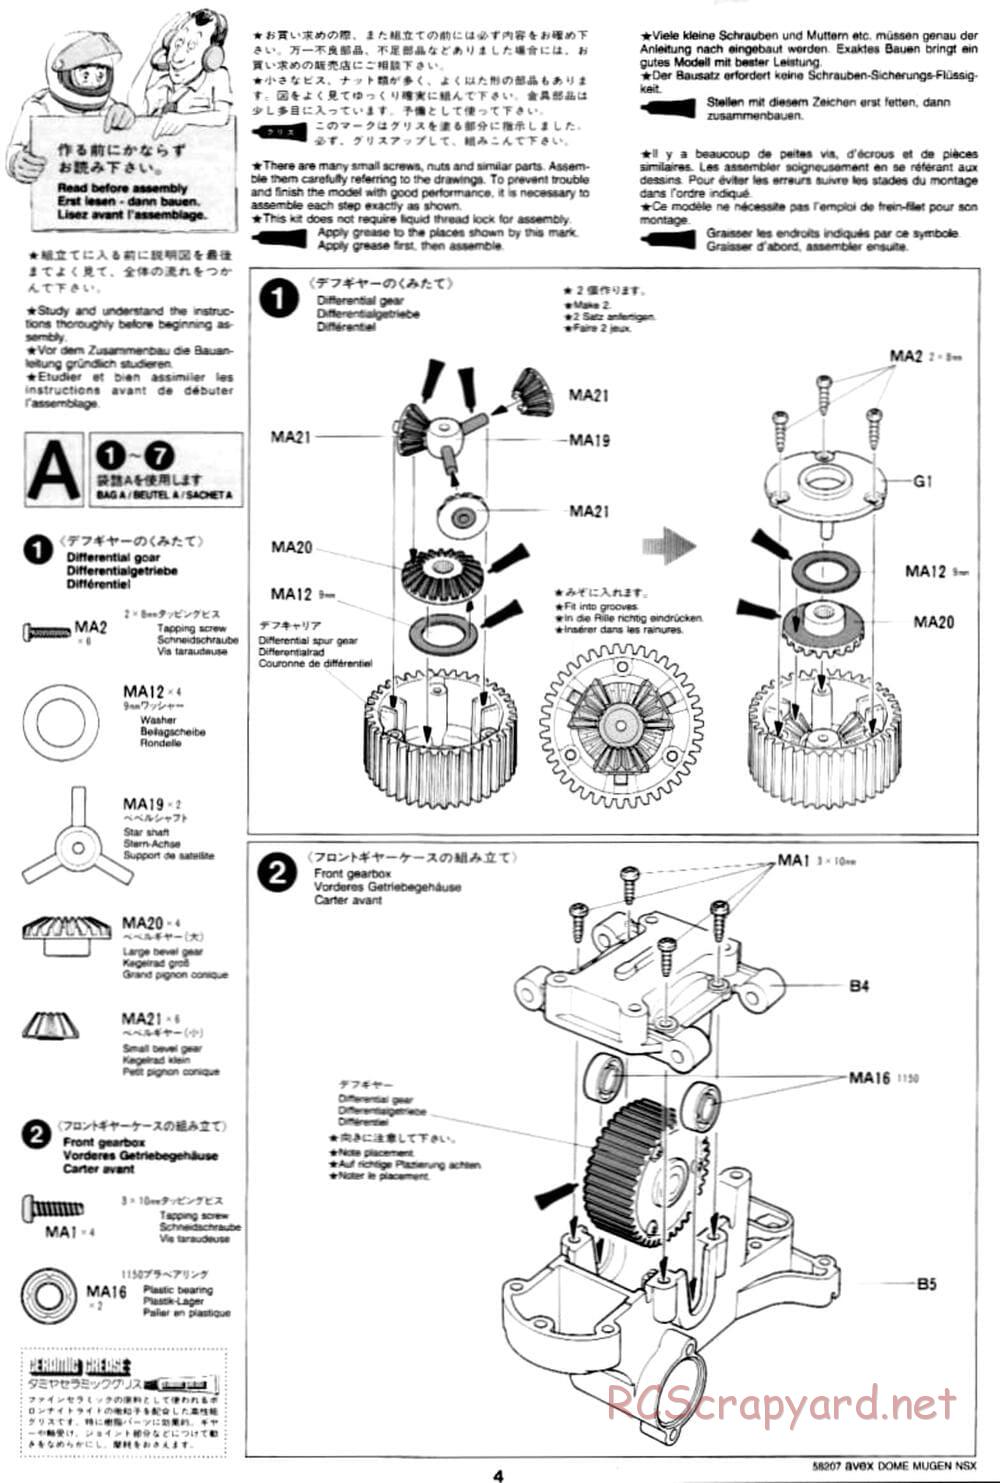 Tamiya - Avex Dome Mugen NSX - TA-03R Chassis - Manual - Page 4